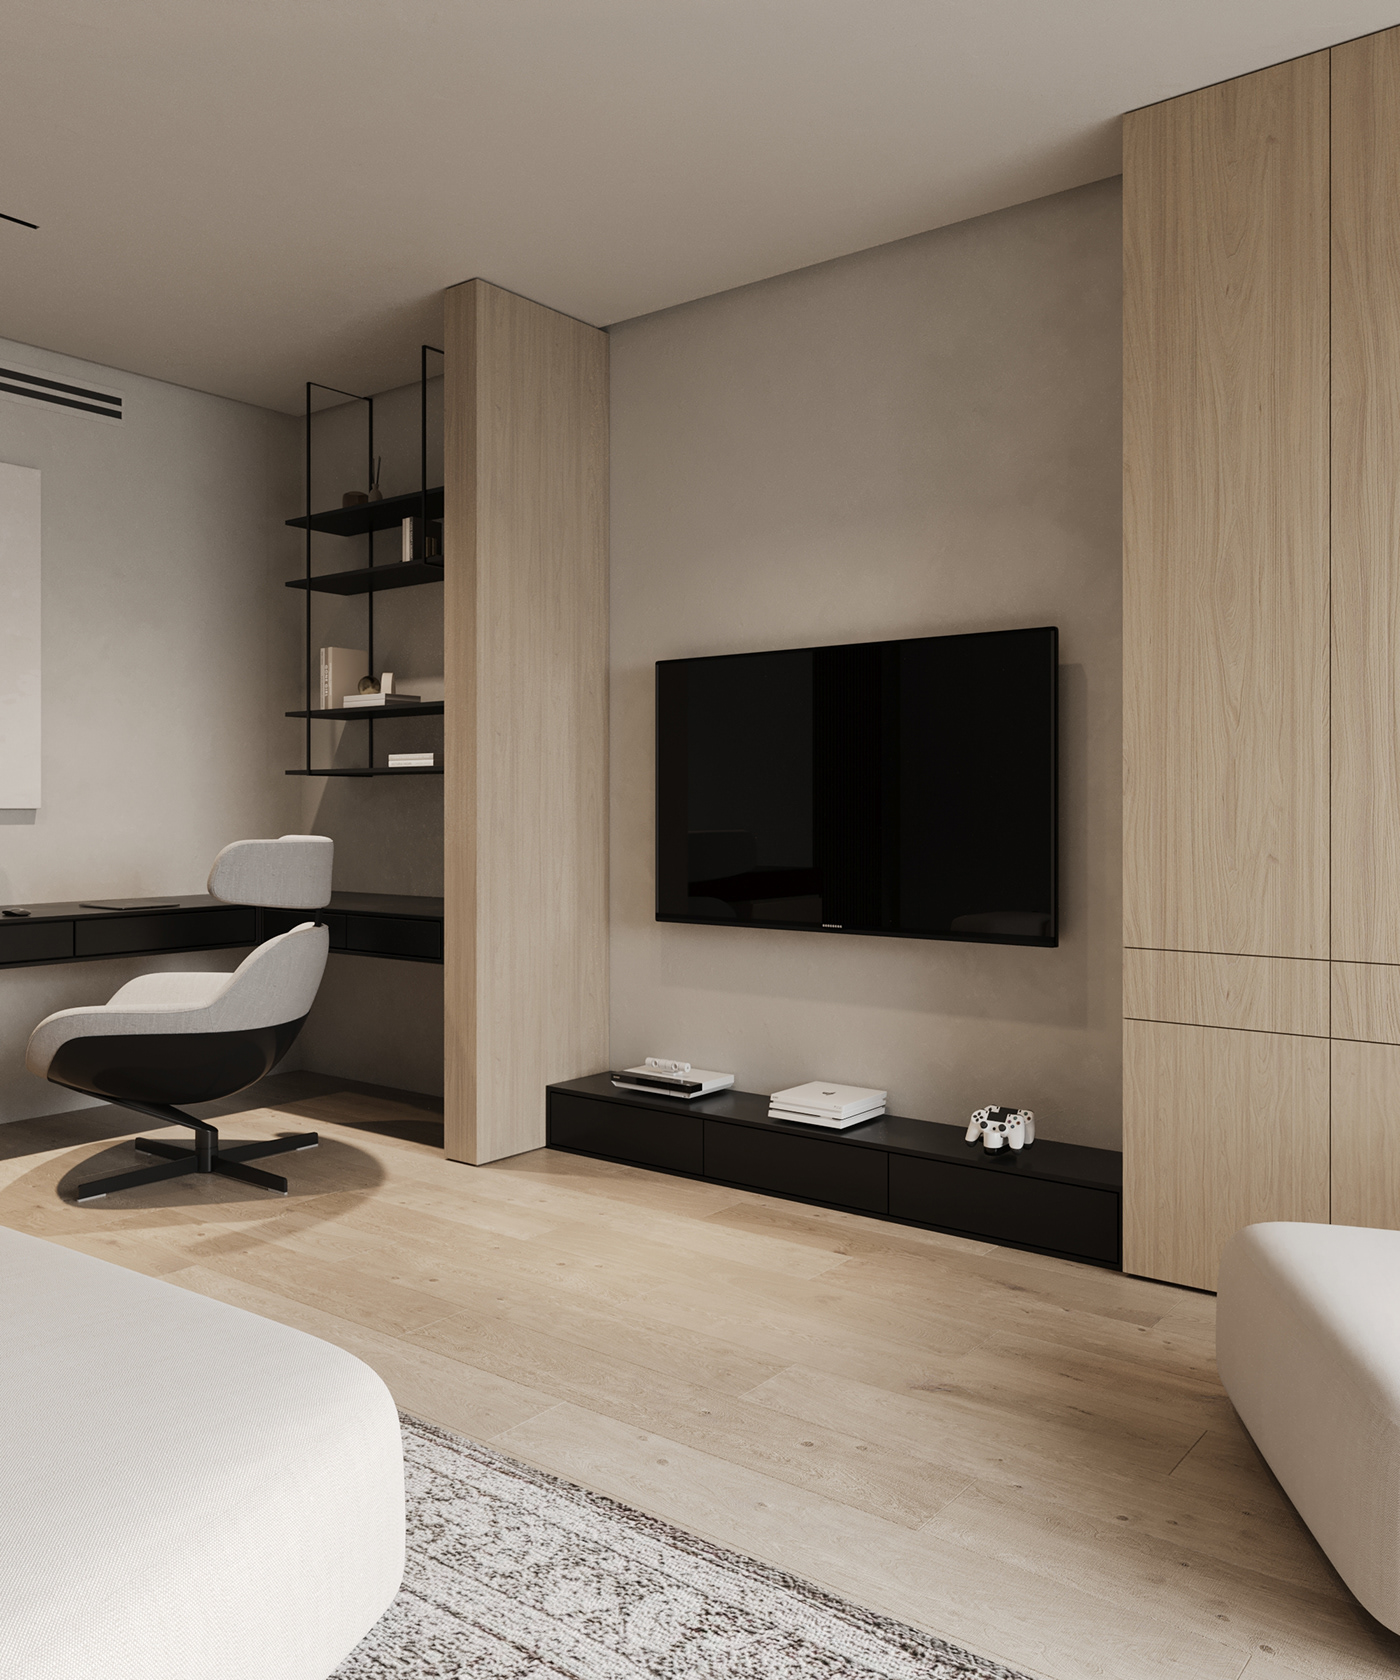 bedroom bedroom design Interior 3ds max modern visualization bathroom design dressing Bedroom interior